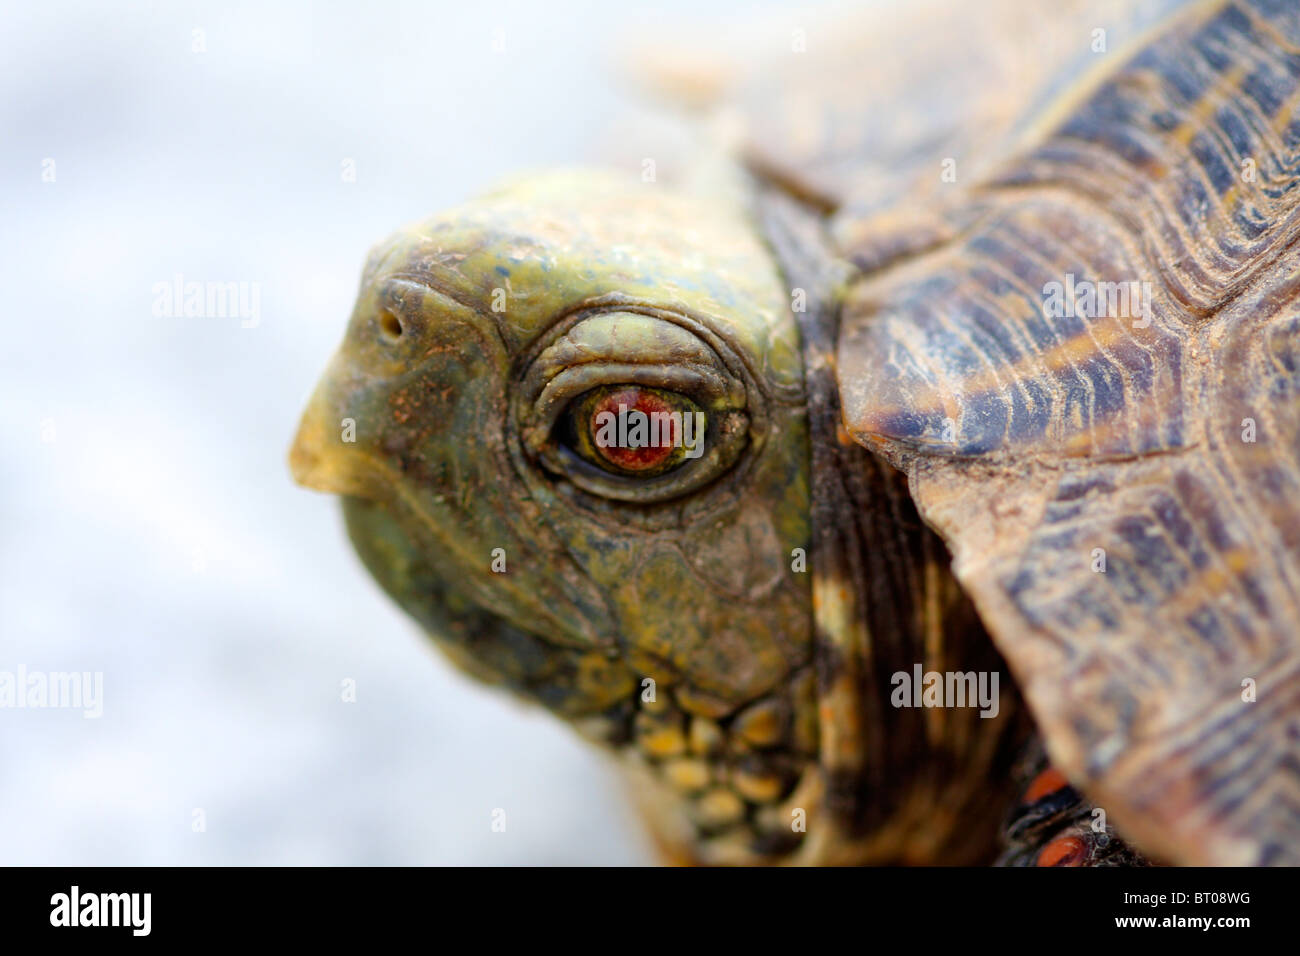 Male Western Ornate Box Turtle (Terrapene ornata), close up Stock Photo